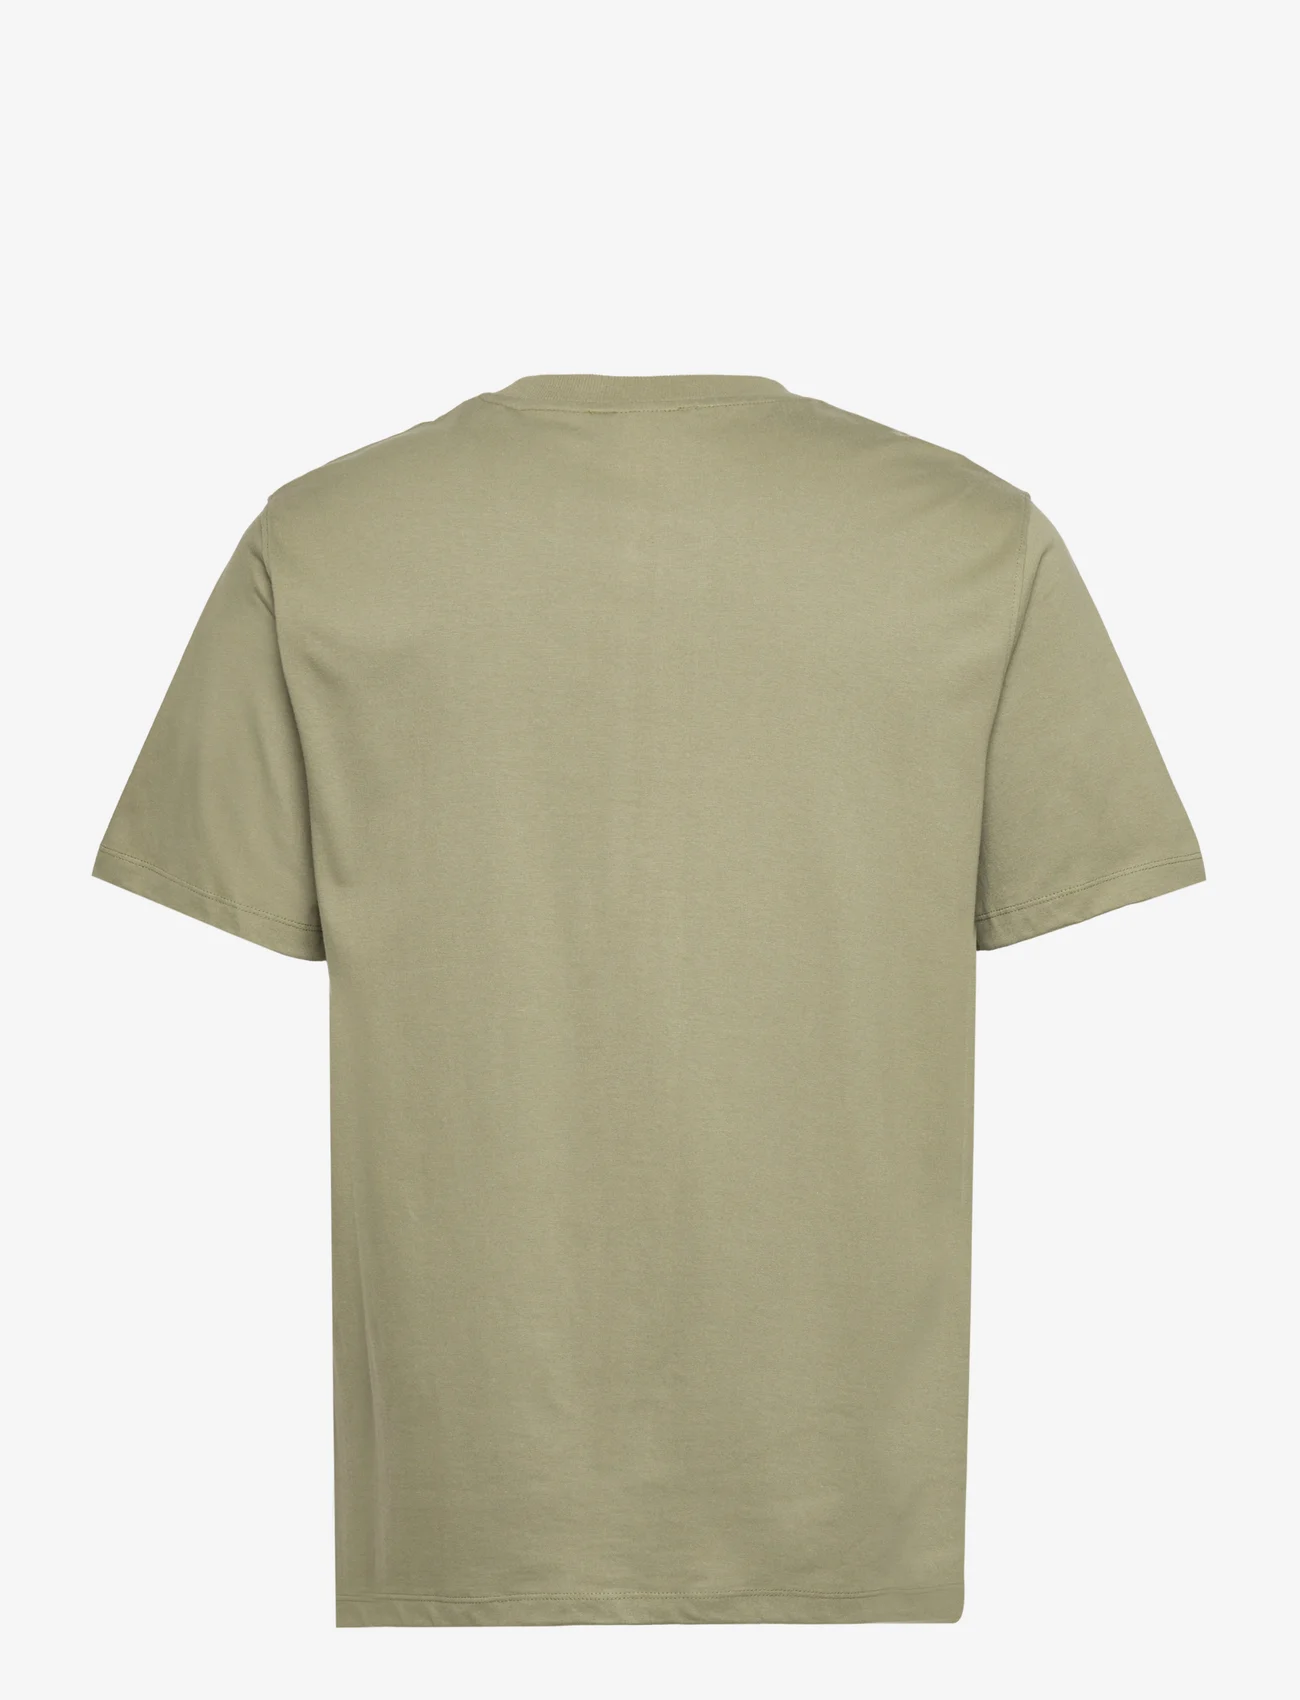 Les Deux - Donovan T-shirt - korte mouwen - dusty moss/ivory - 1